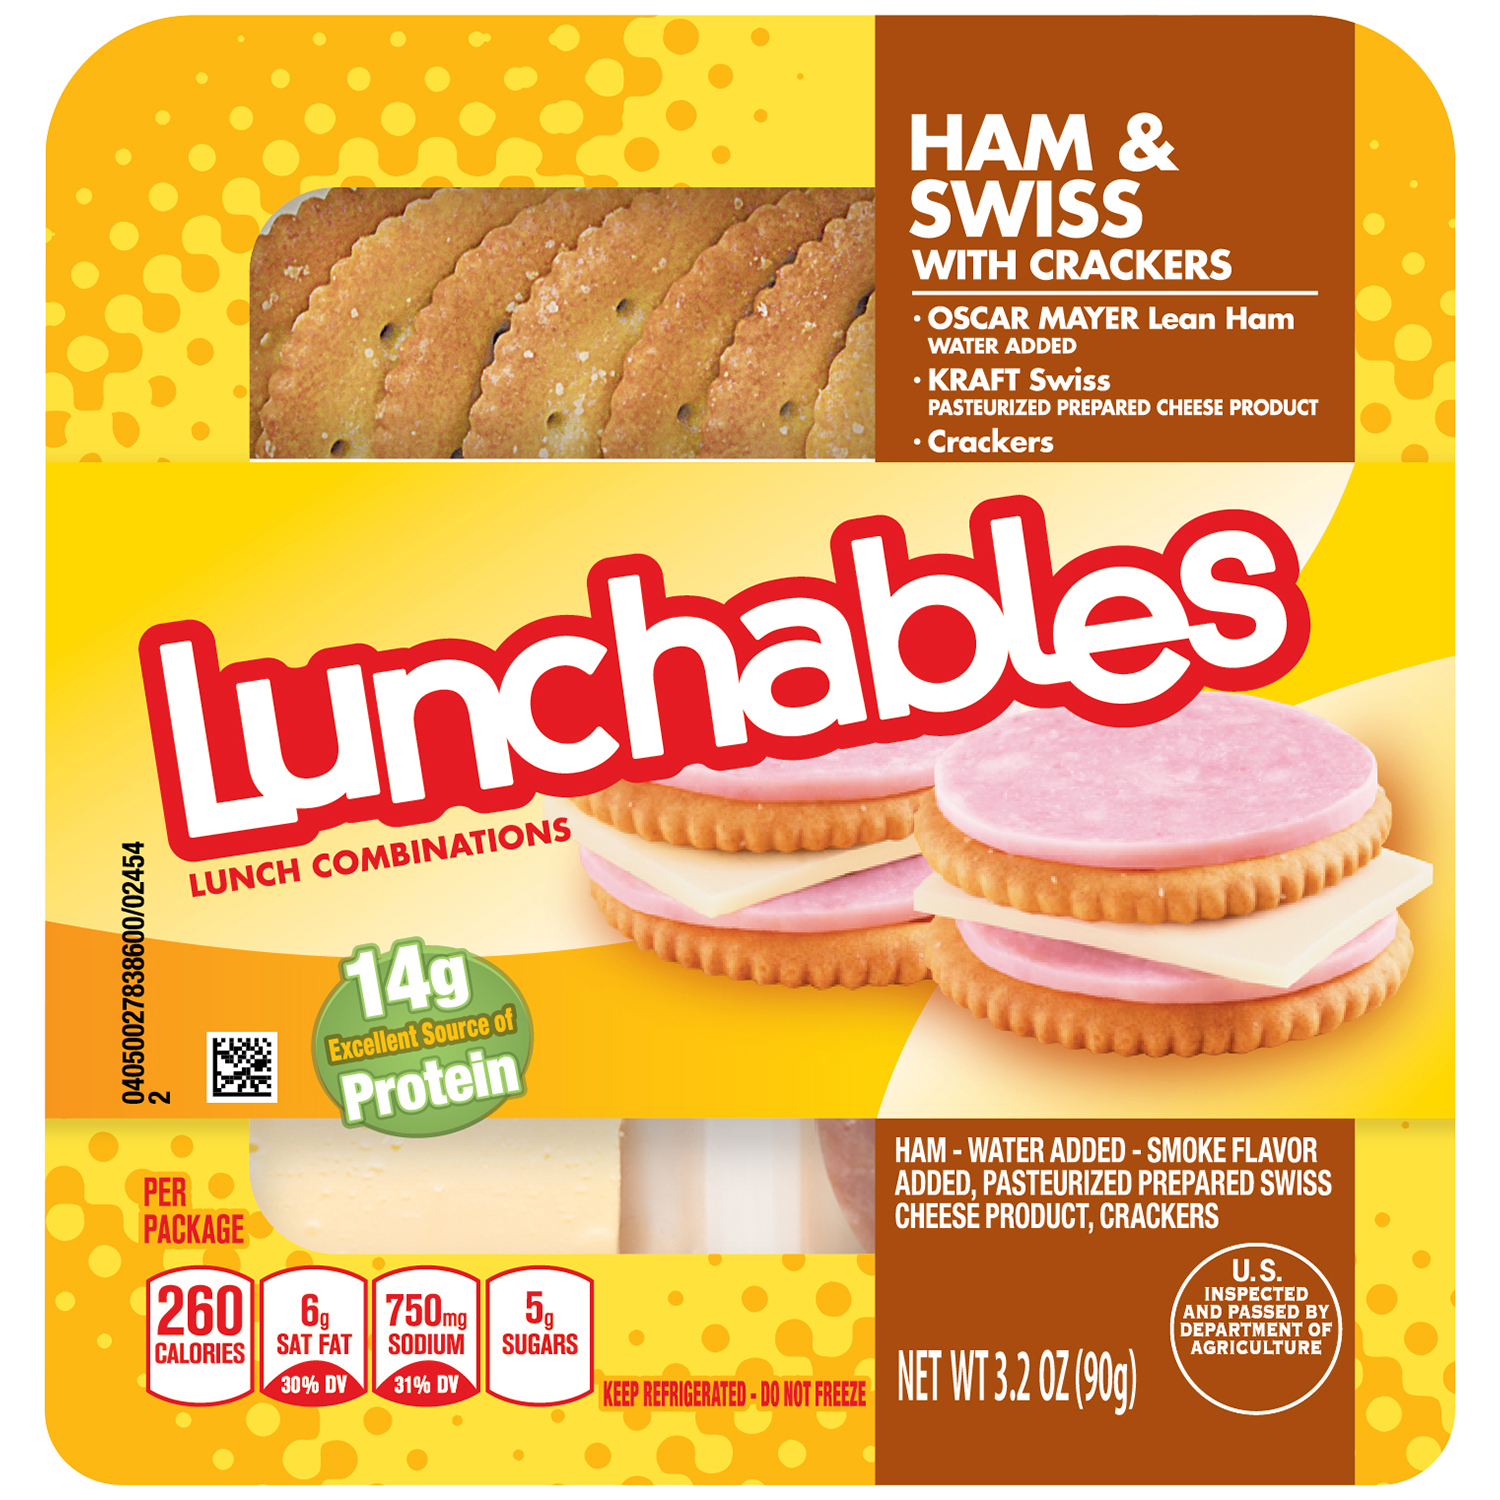 UPC 044700024546 product image for Ham & Swiss with Crackers 3.2 OZ TRAY | upcitemdb.com